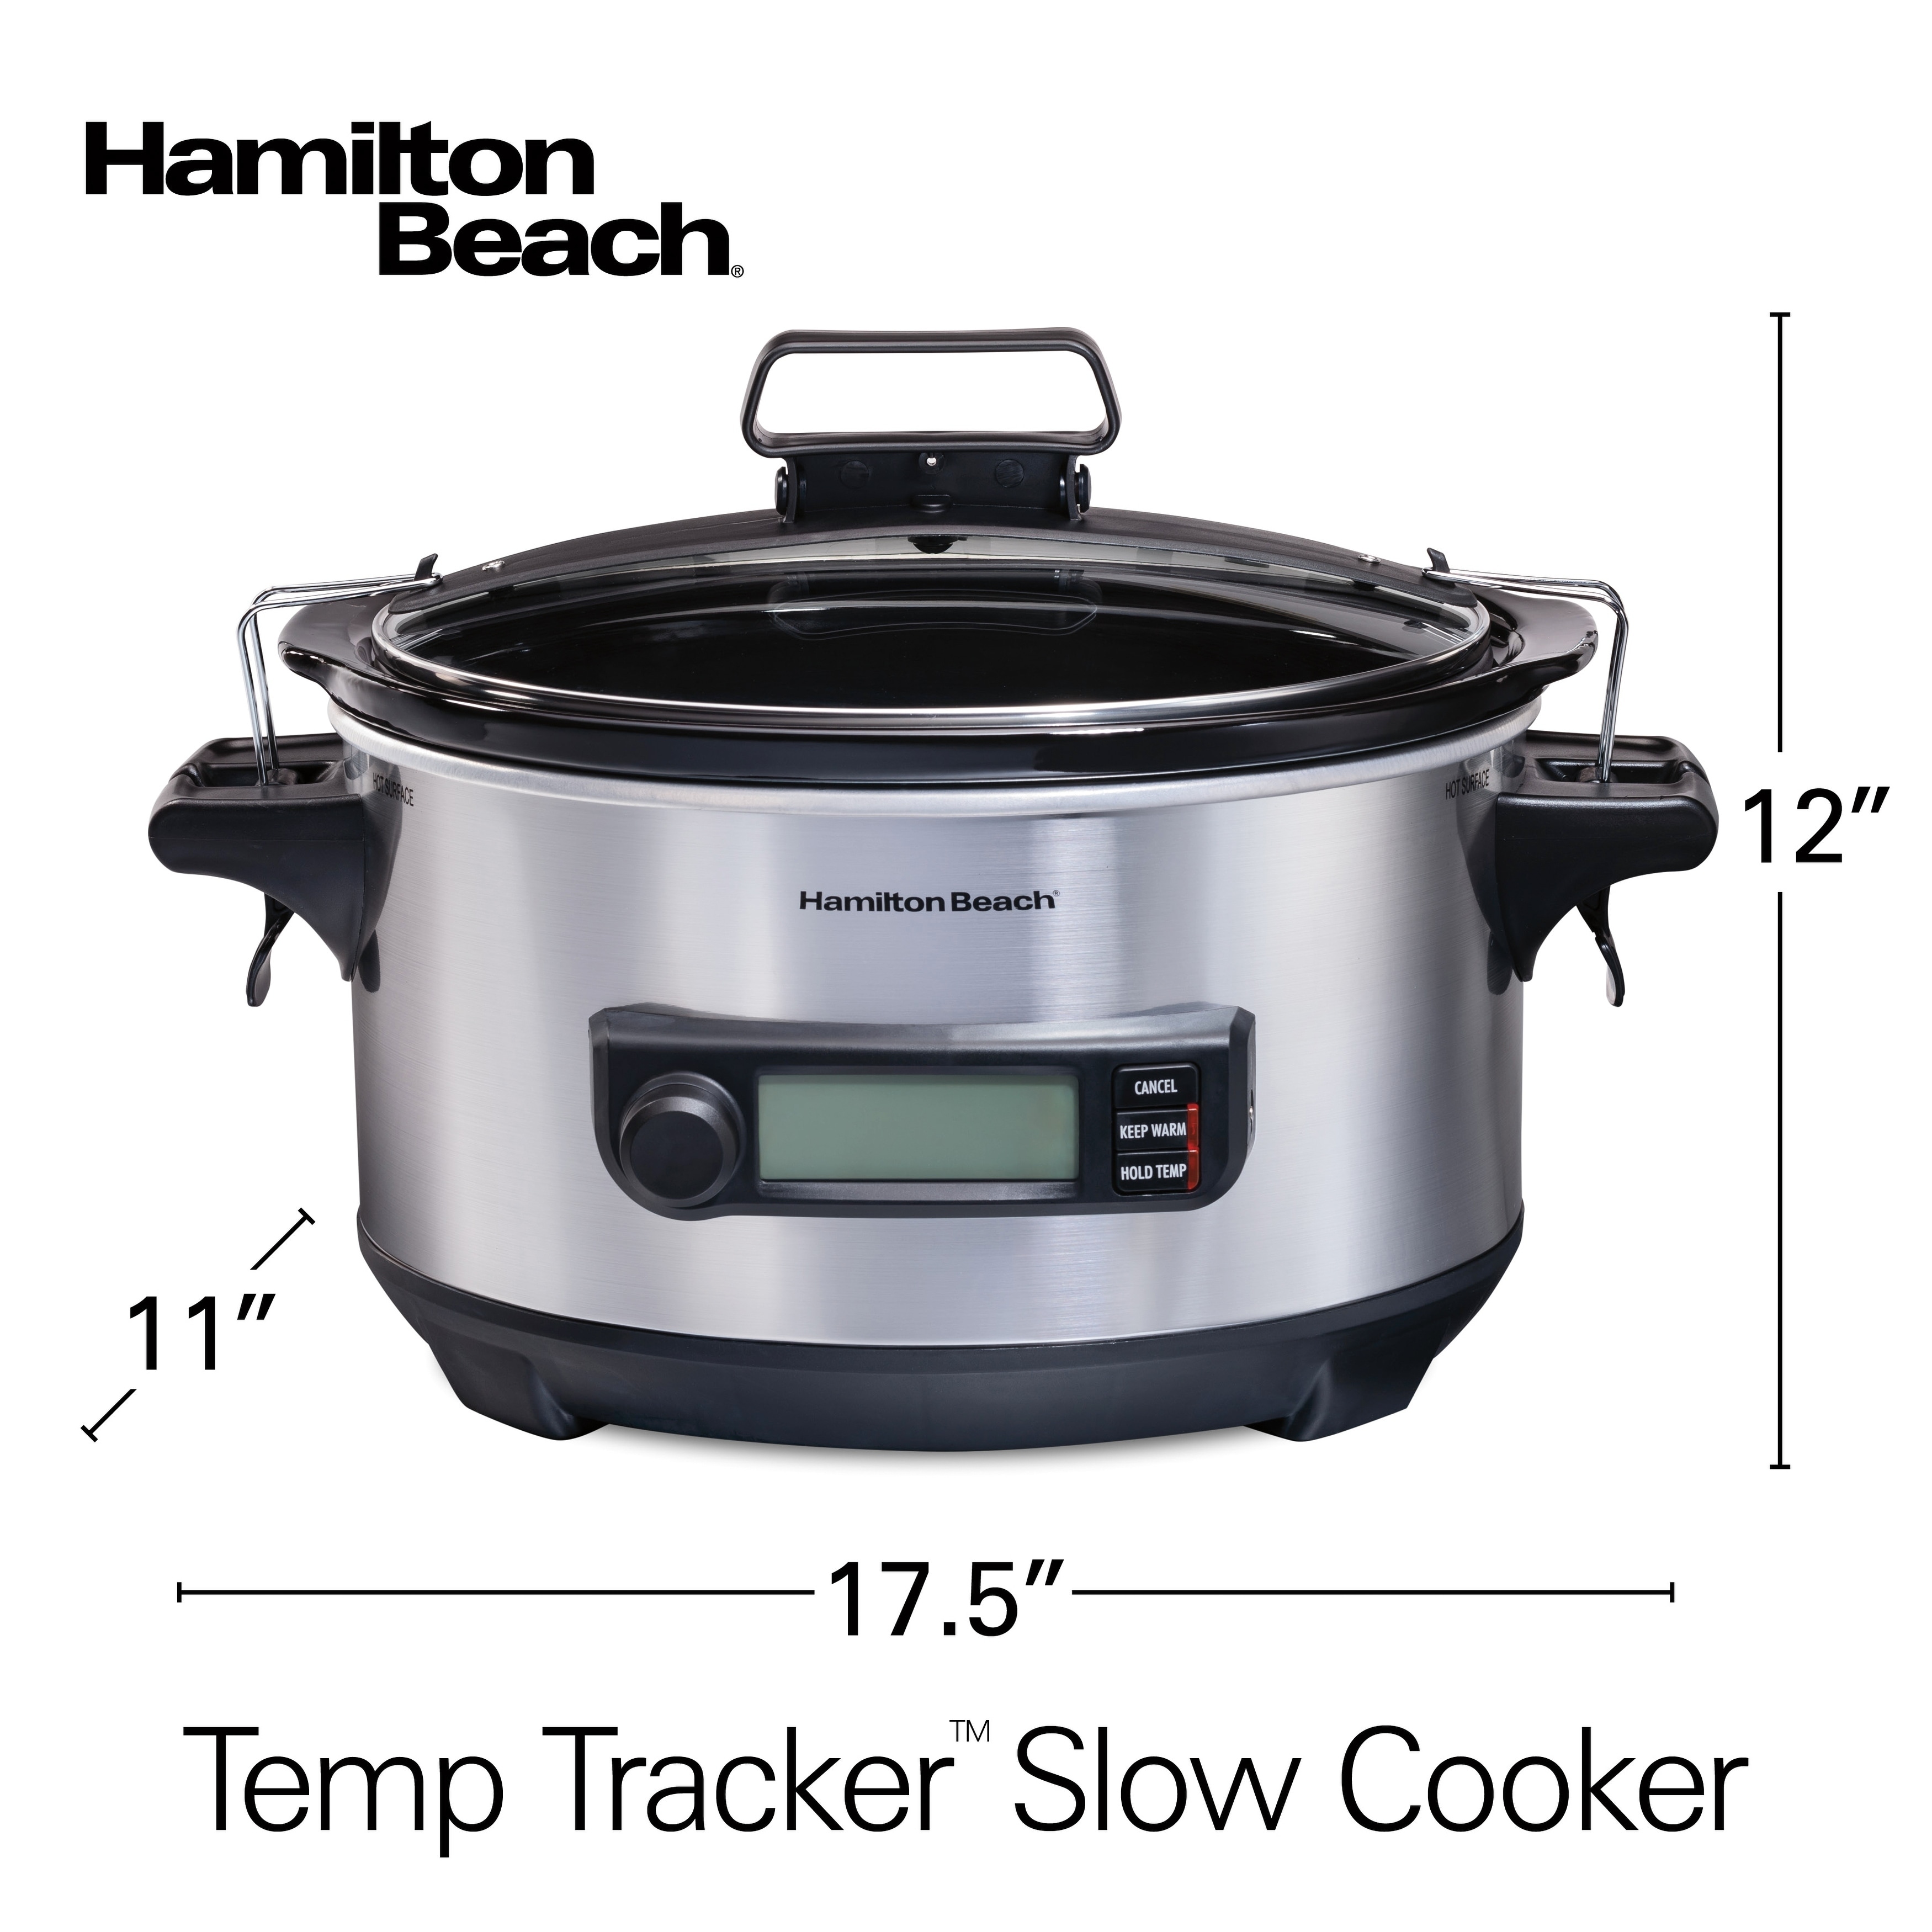 Hamilton Beach Temp Tracker 6-quart Slow Cooker